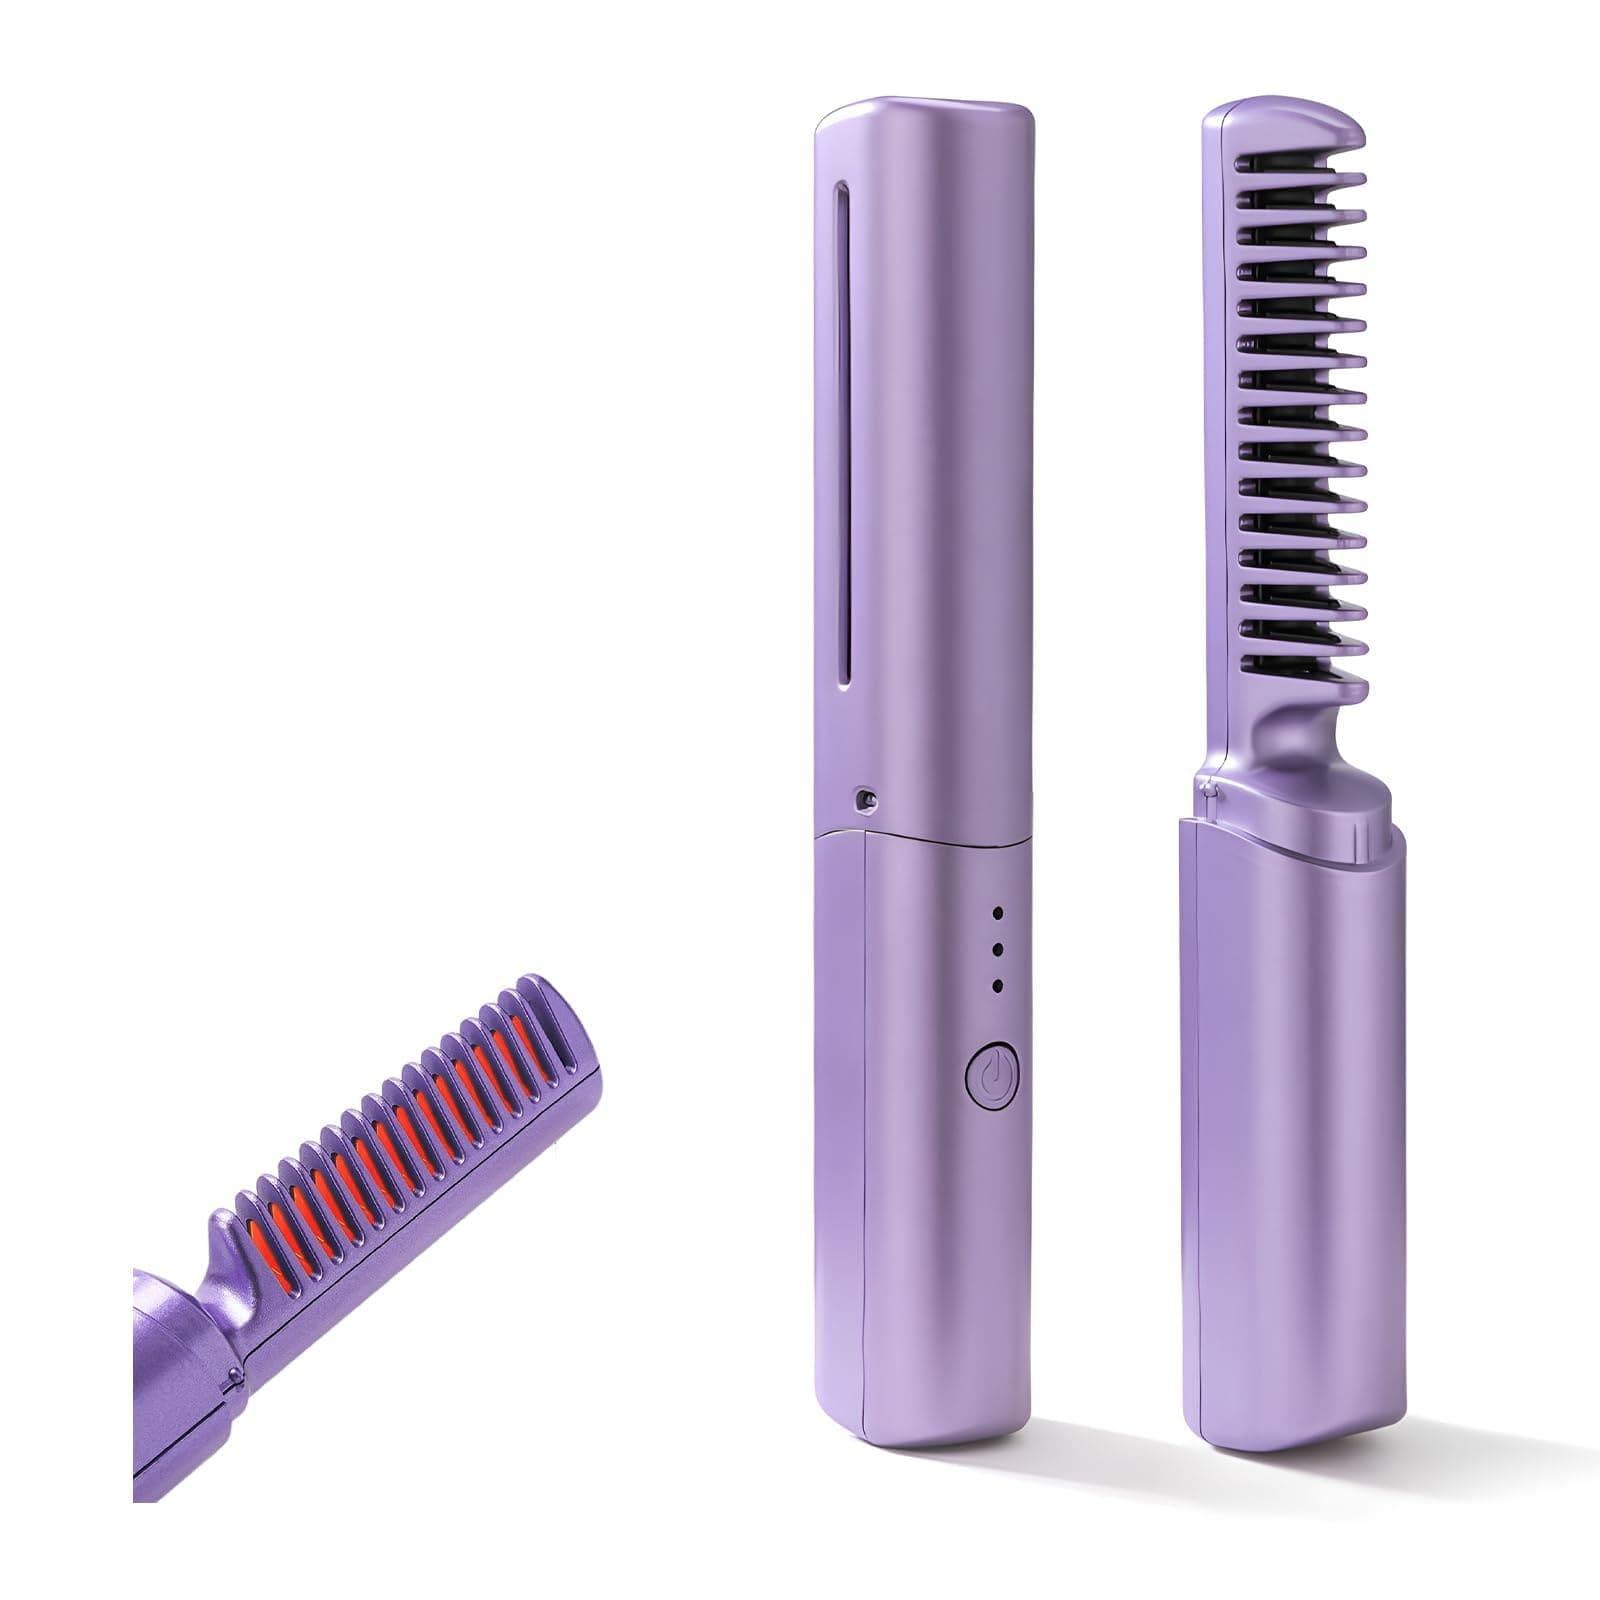 The Brandify Hair Comb Rechargeable Hair Straightener Brush